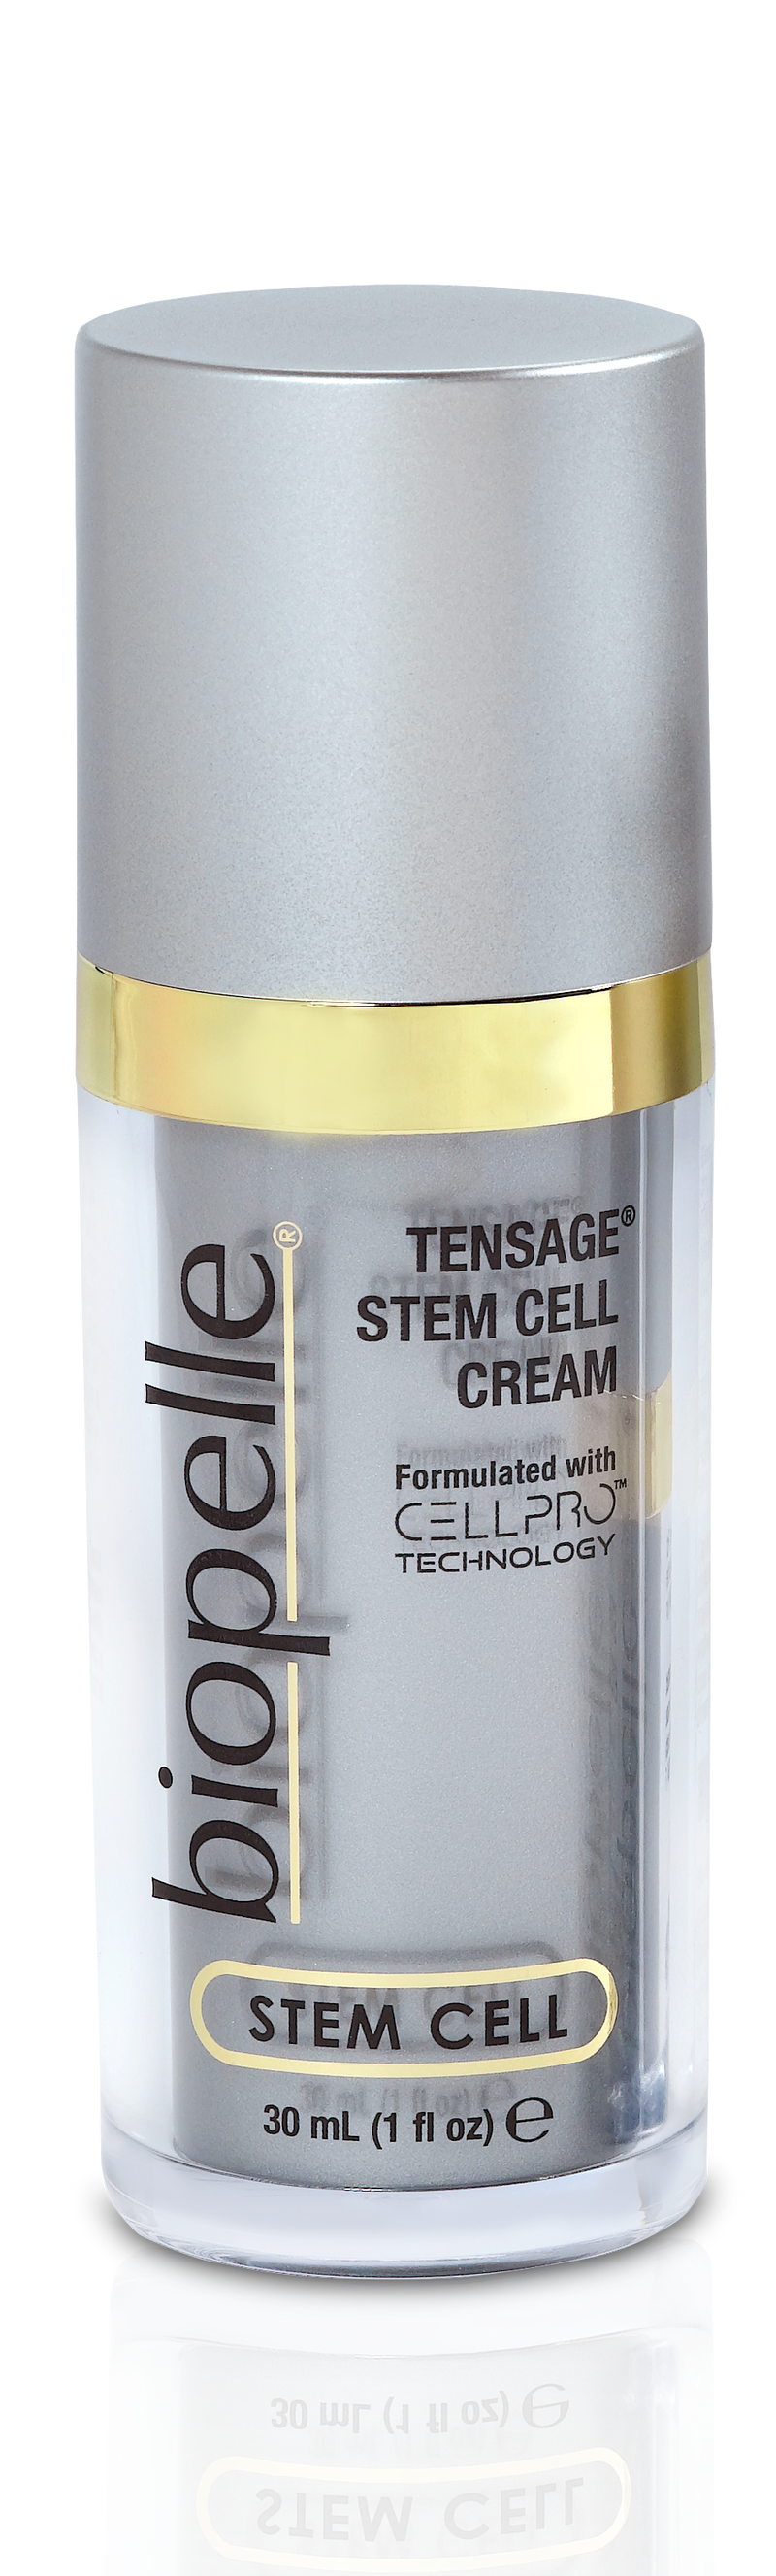 Biopelle Tensage Stem Cell Face Cream 30ml